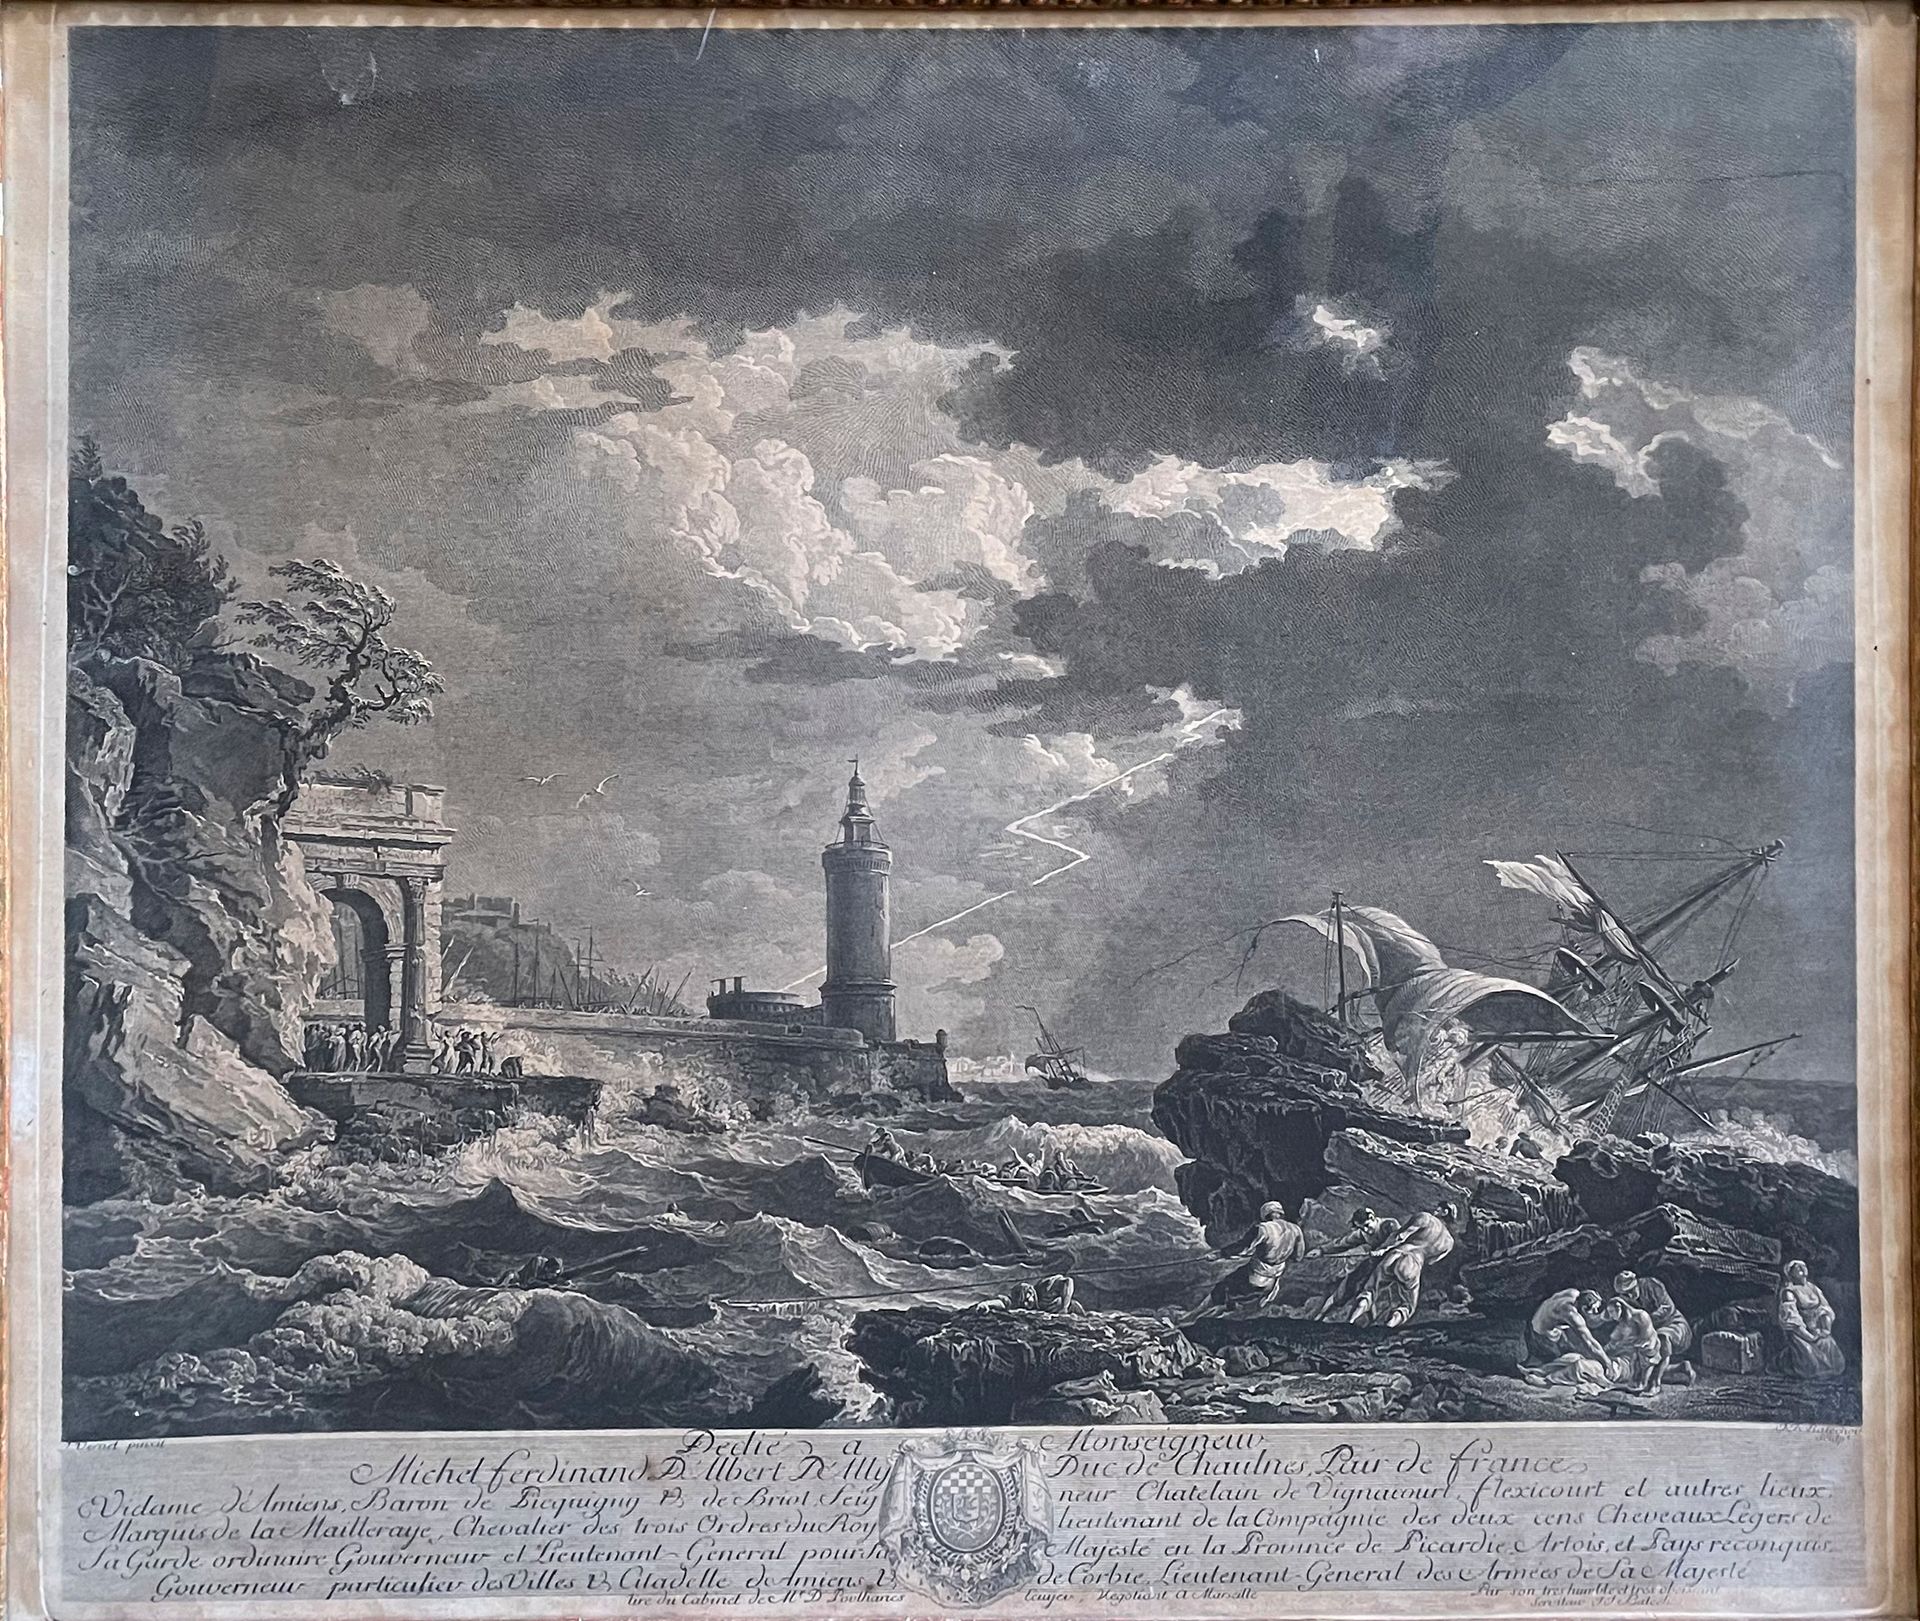 D'après Joseph VERNET, engraved by Balechou 

Scene of a shipwreck 

Engraving

&hellip;